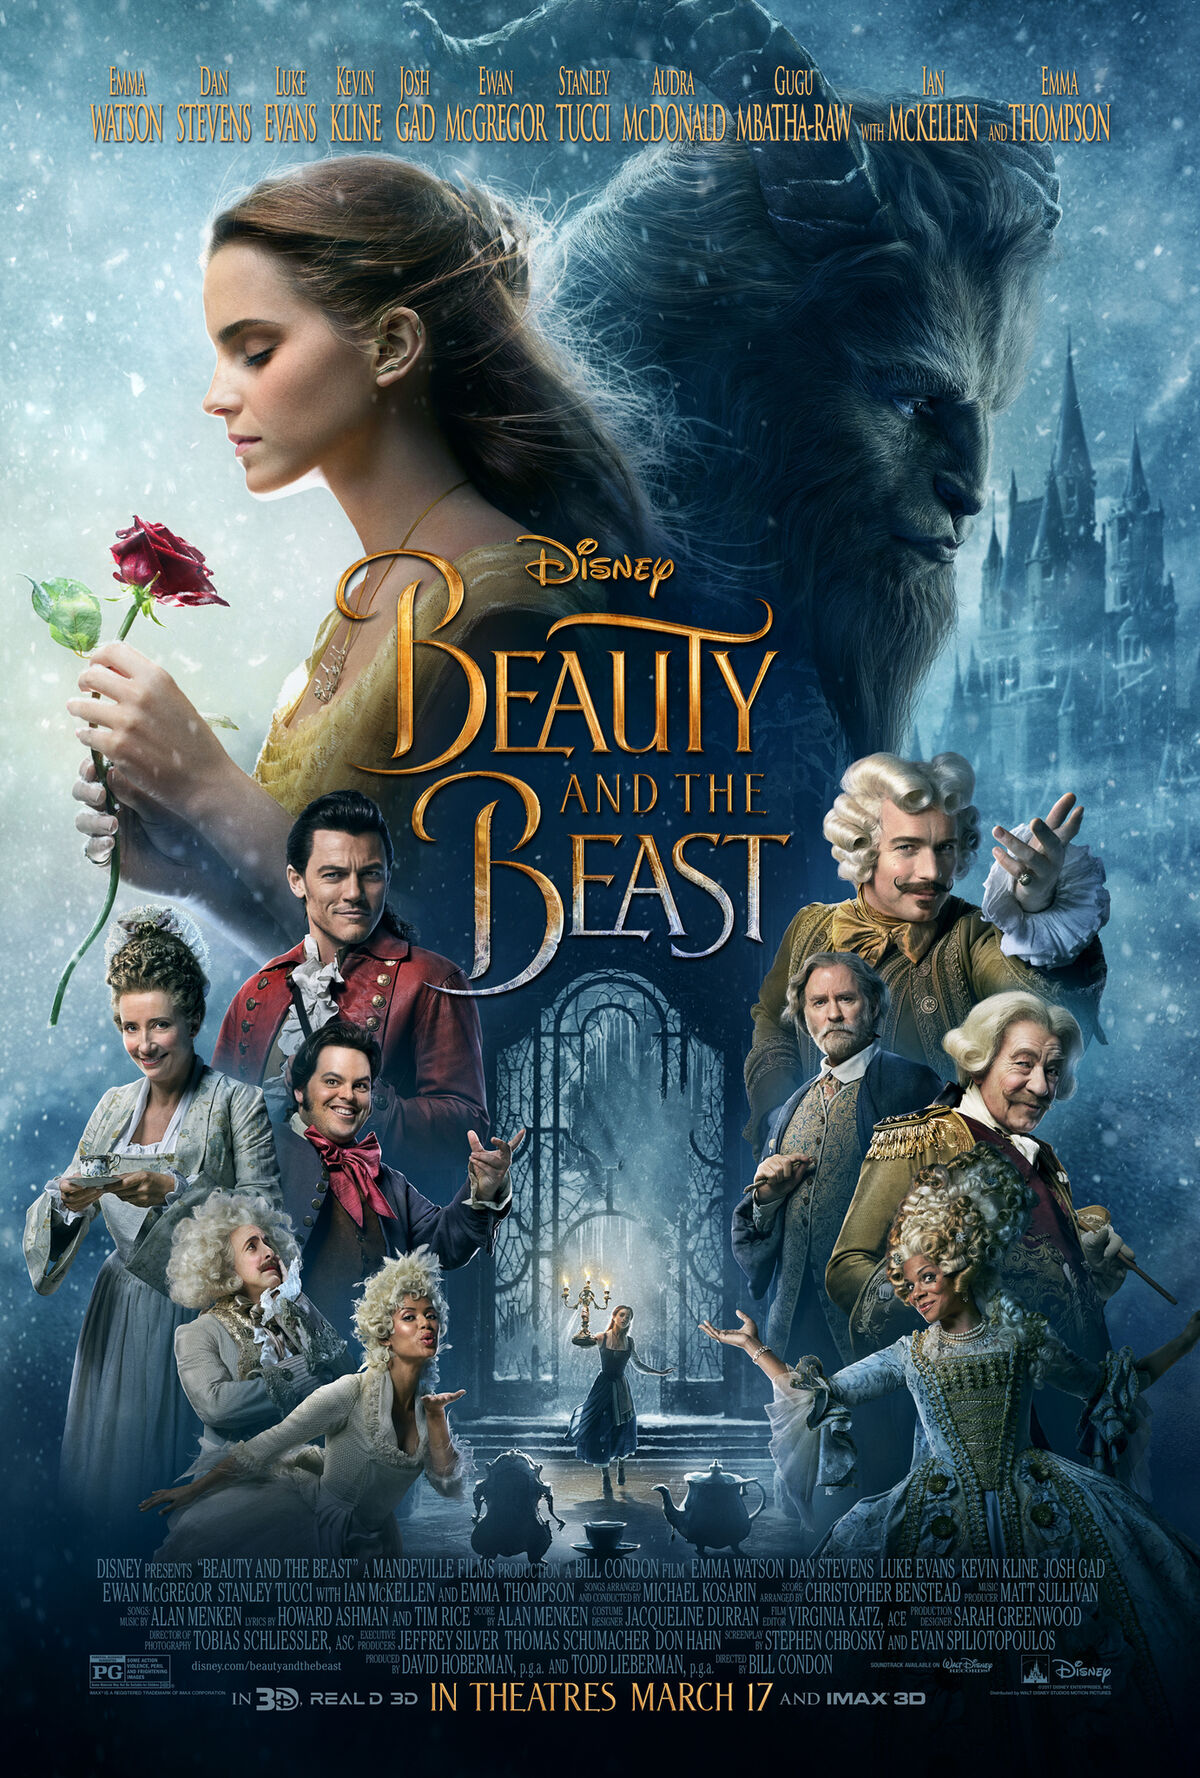 La Bella y la Bestia (Beauty and the Beast) (2017) - فیلم‌ها در Google Play